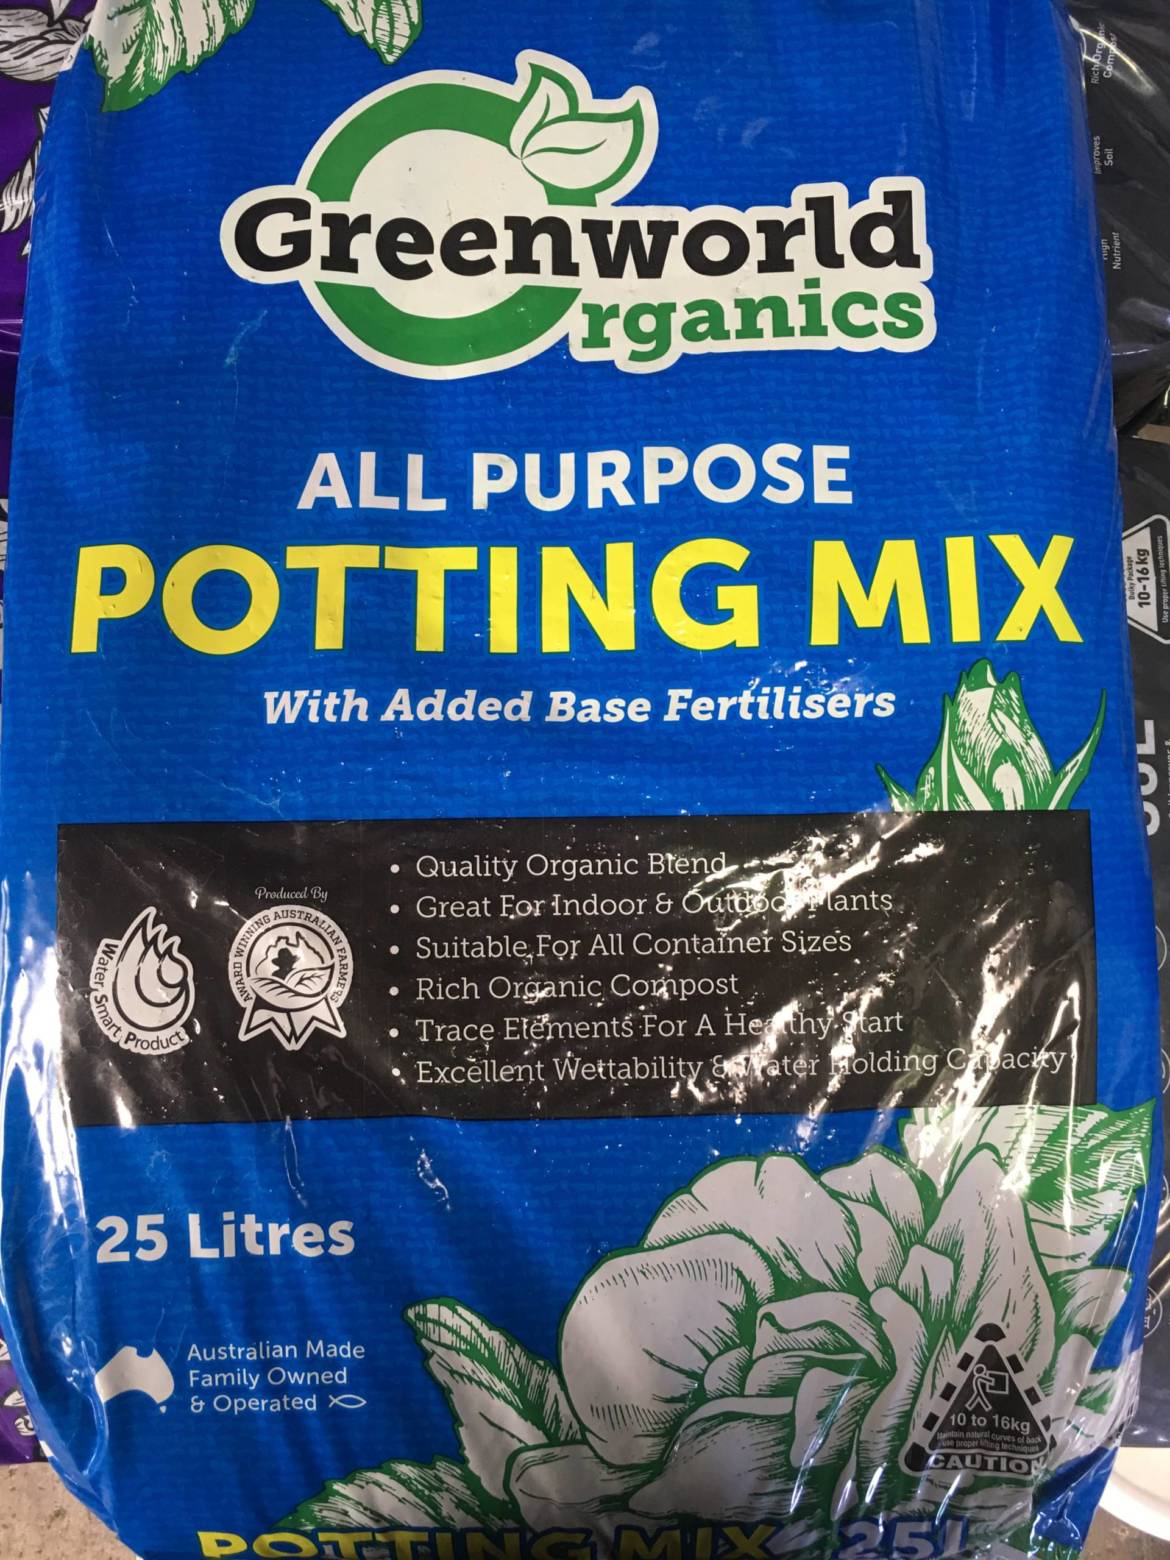 Greenworld-organics-All-purpose-potting-mix-1-scaled.jpg